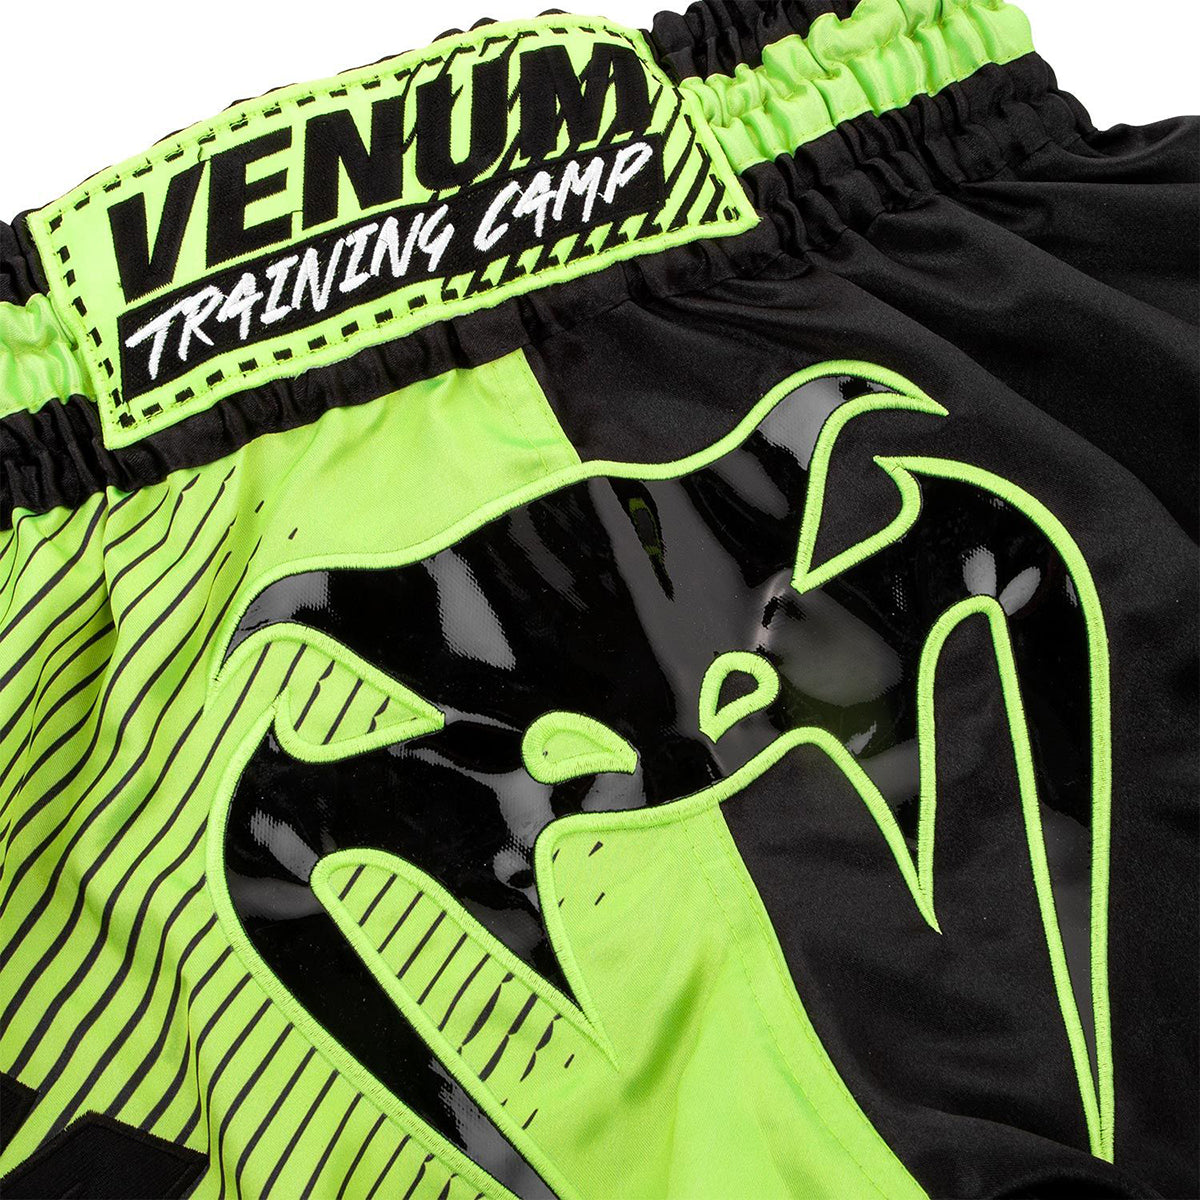 Venum Training Camp Muay Thai Shorts - Black/Neo Yellow Venum